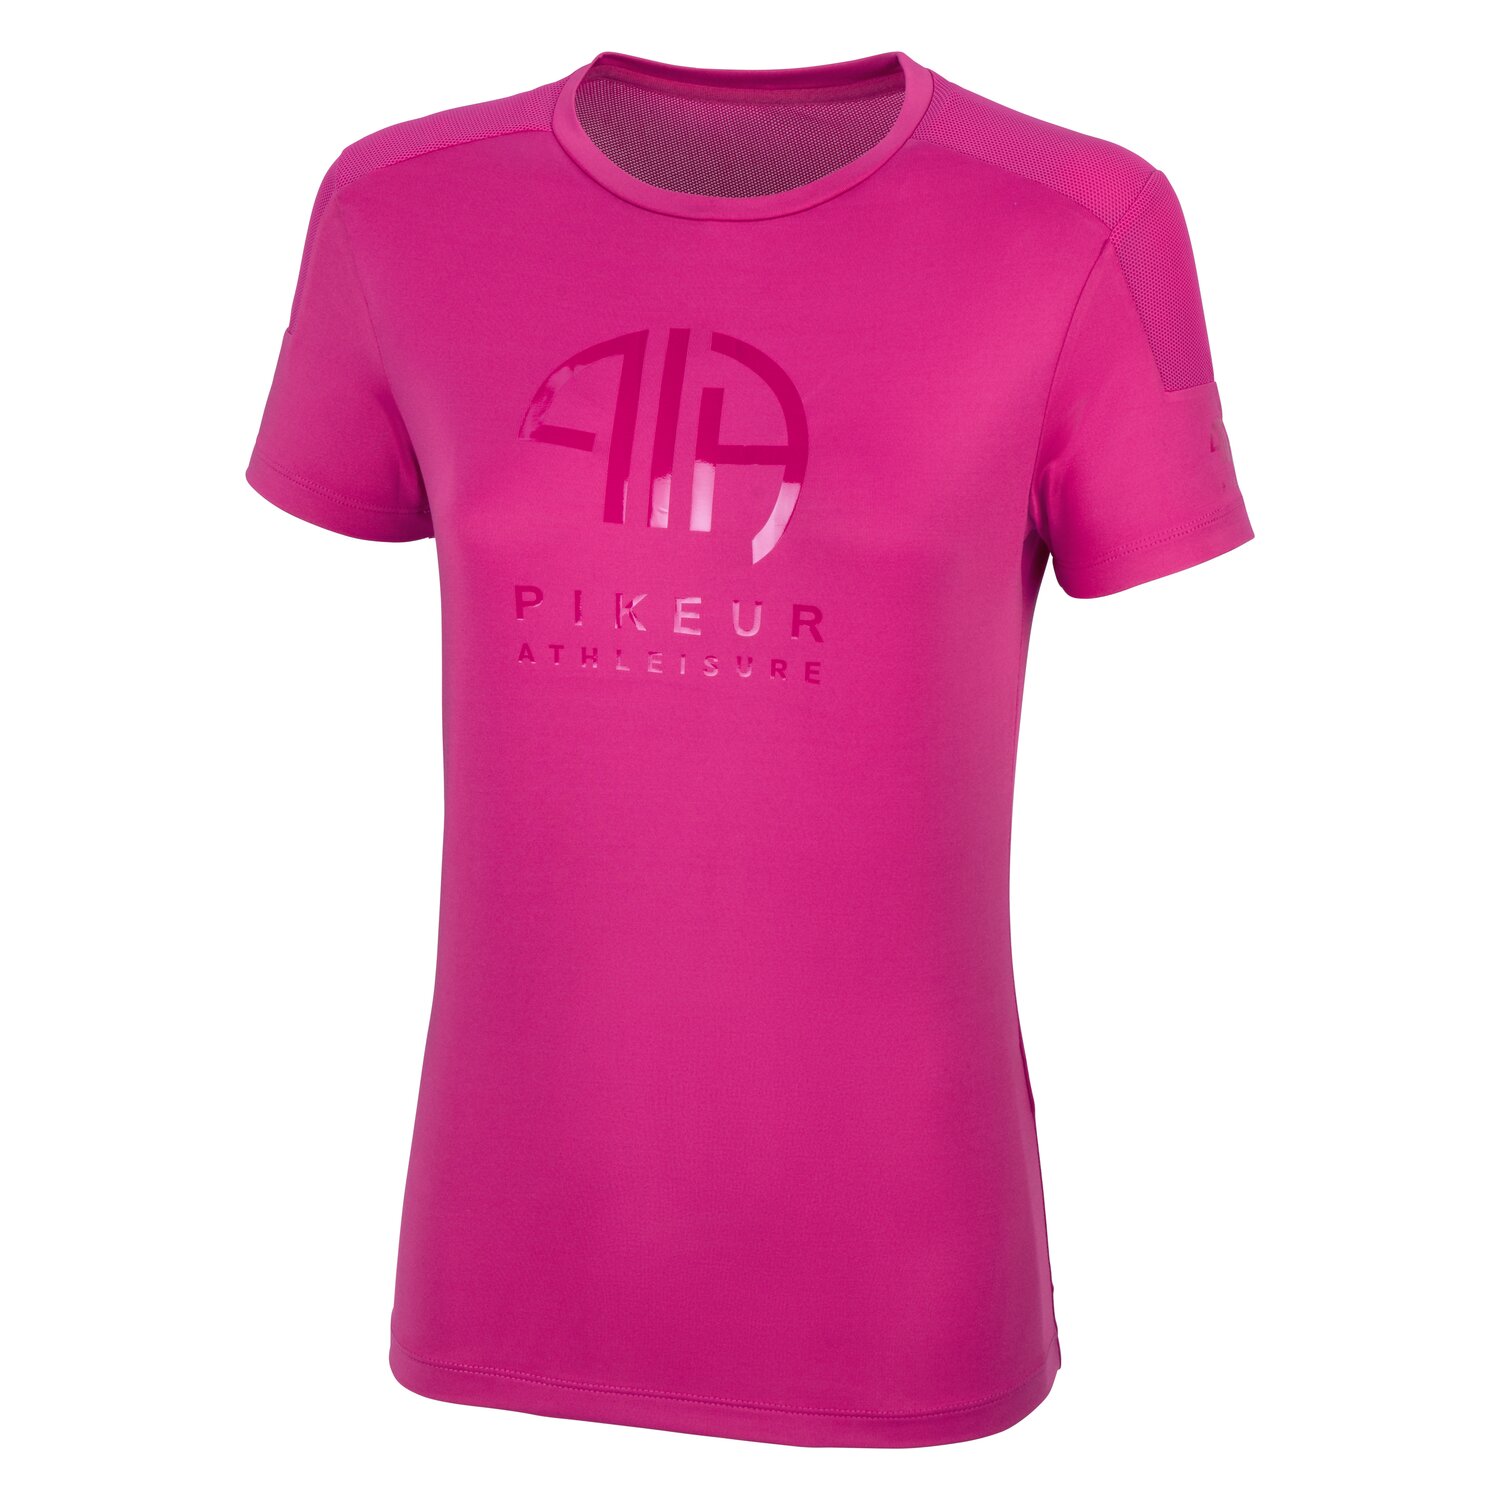 PIKEUR Hybrid-Shirt Trixi Athleisure hot-pink | 46